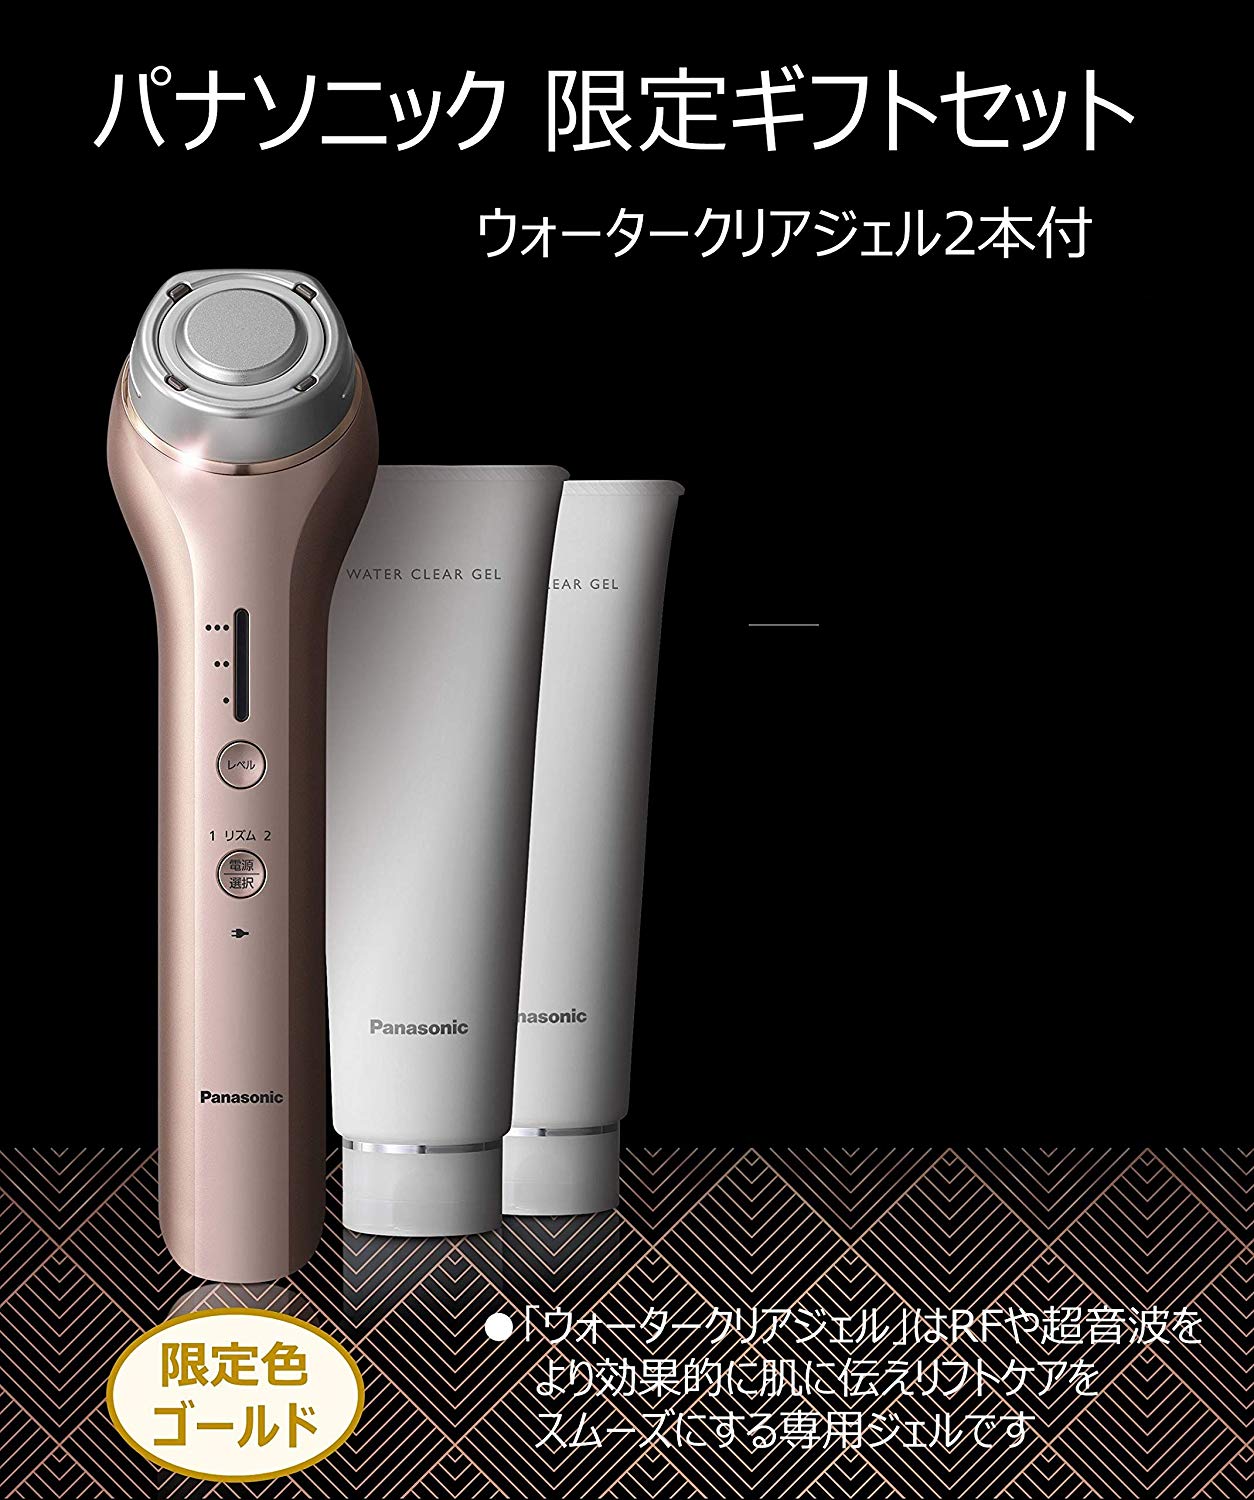 Panasonic gift set beauty device RF (radio wave) & 2 water clear